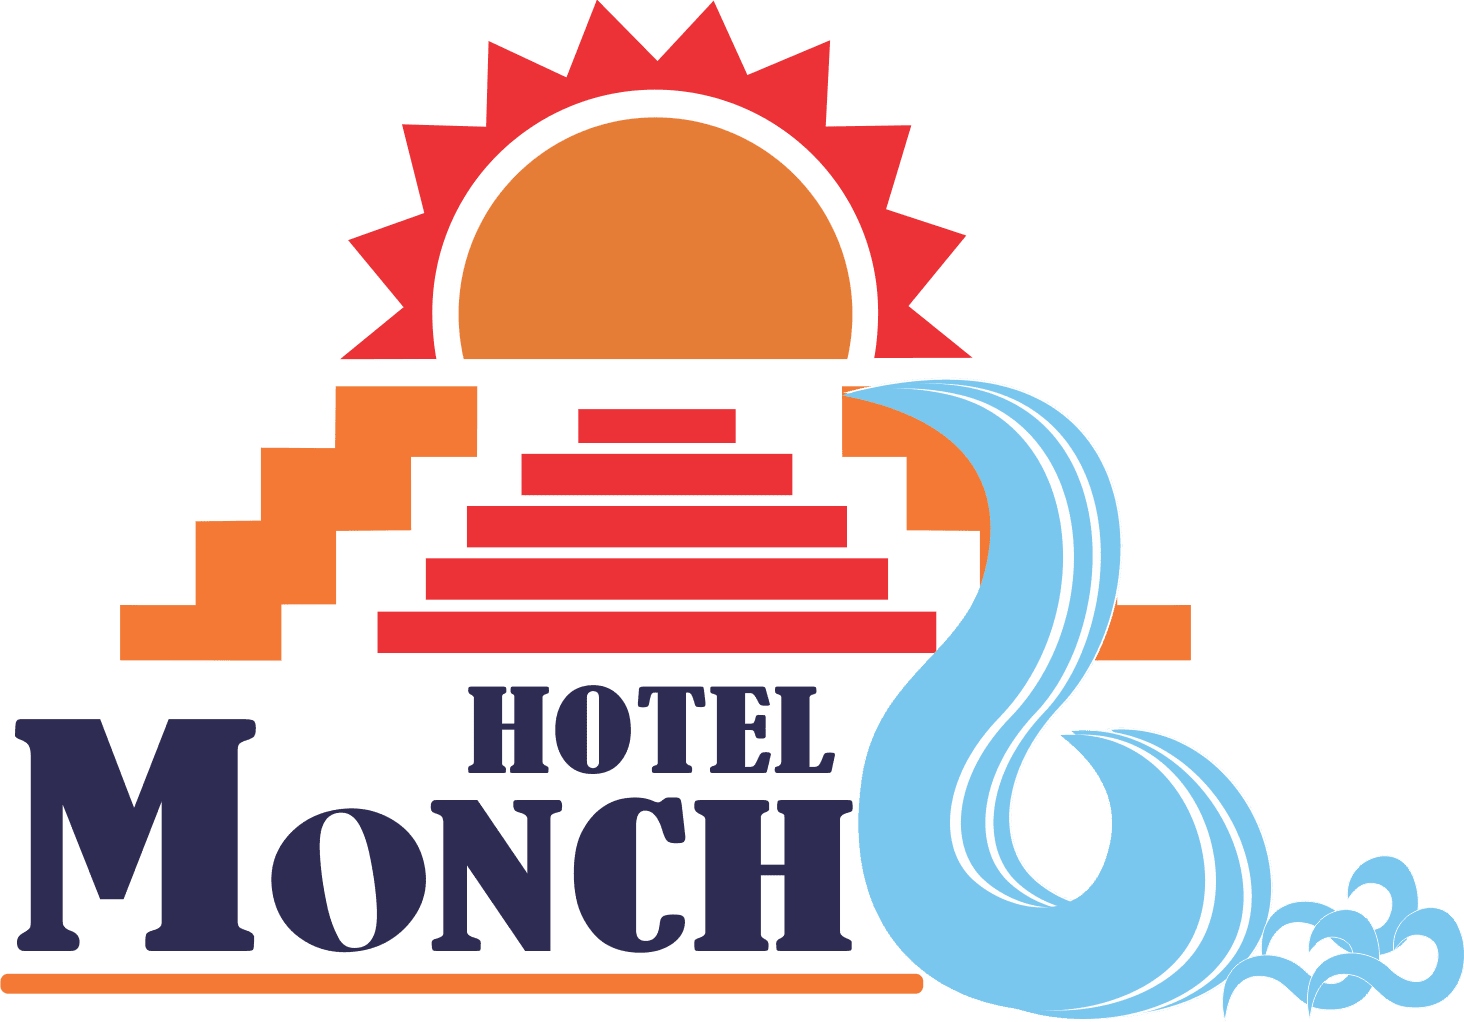 Hotel Moncho